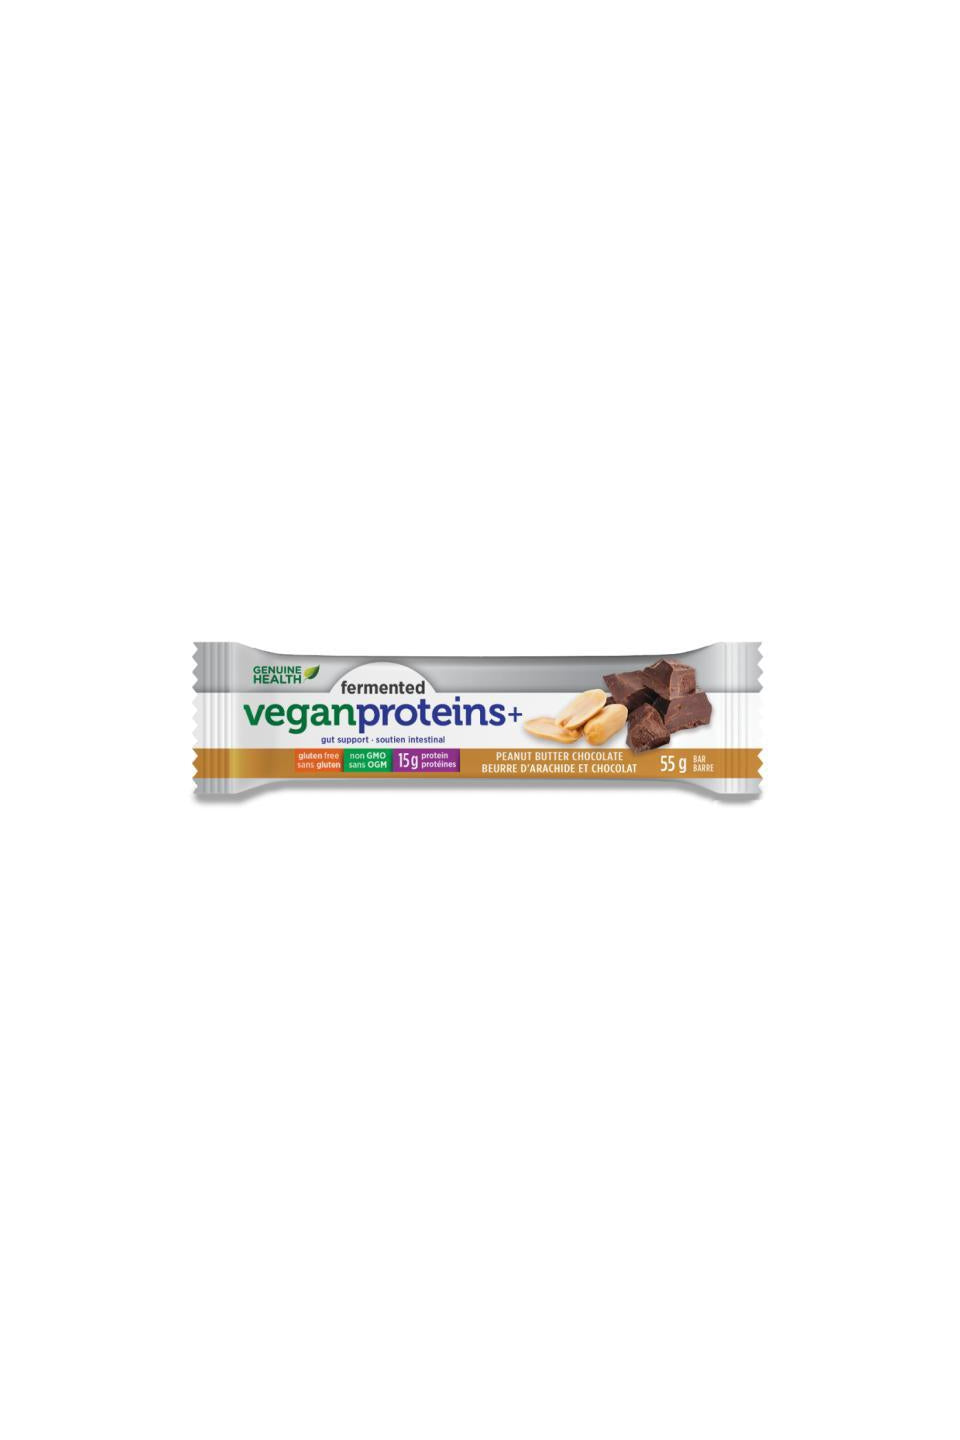 Genuine Health Fermented Vegan Proteins+ Bar - Peanut Butter Chocolate 55g